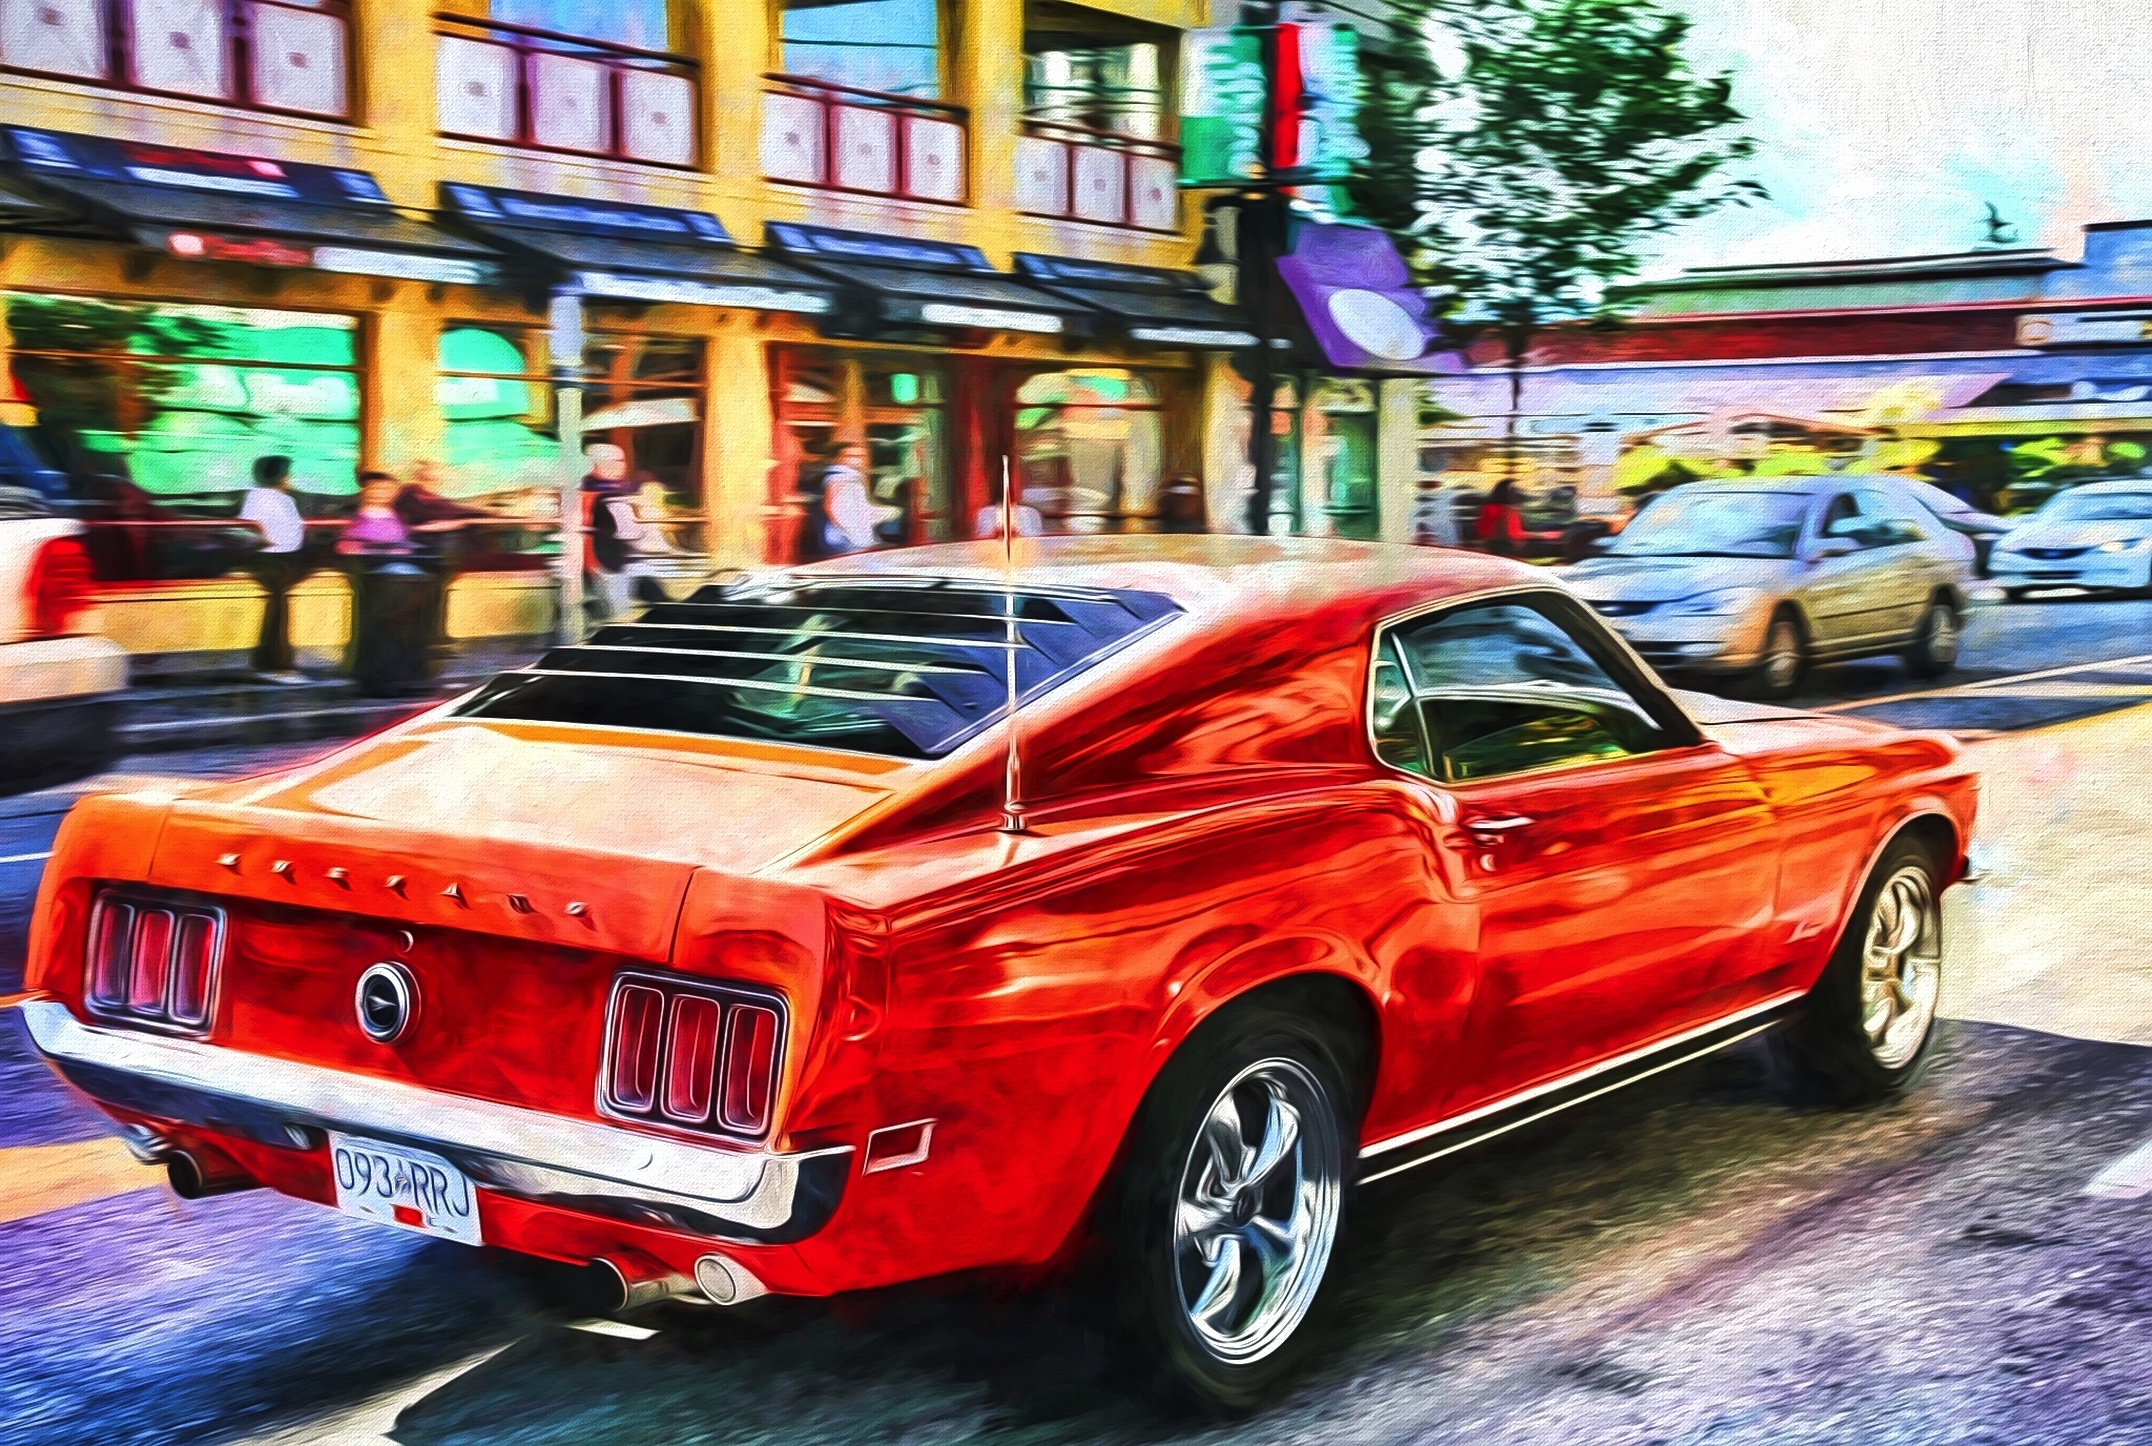 Тачки арты. Форд Мустанг 1967 красный. Форд Мустанг 90. Muscle car Мустанг. Форд Мустанг картина.